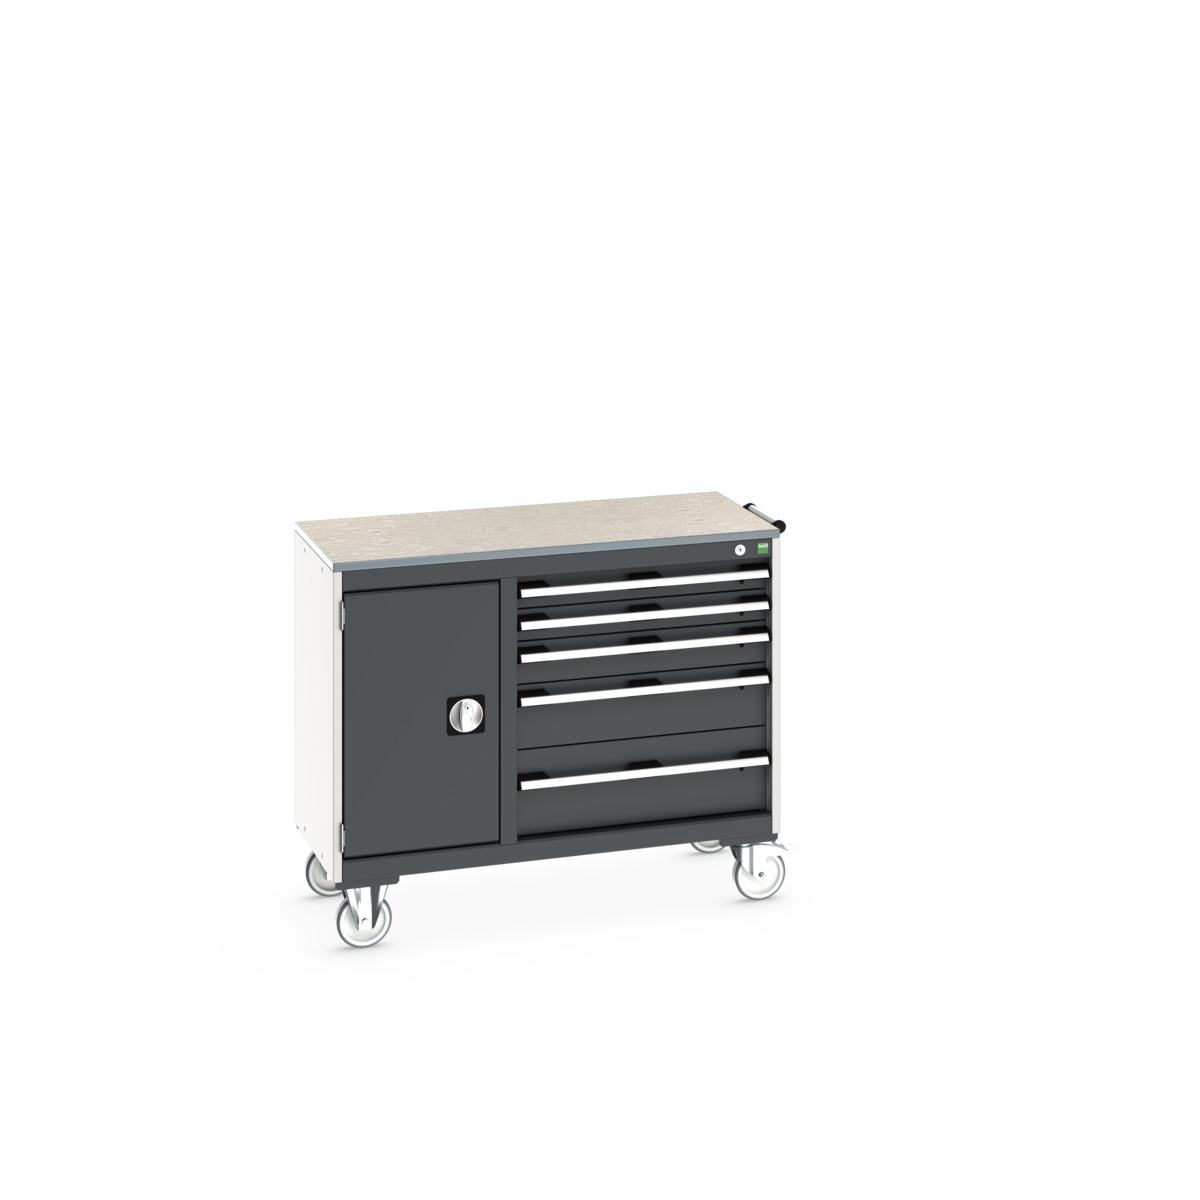 41006014. - cubio mobile cabinet 40/60 (lino)